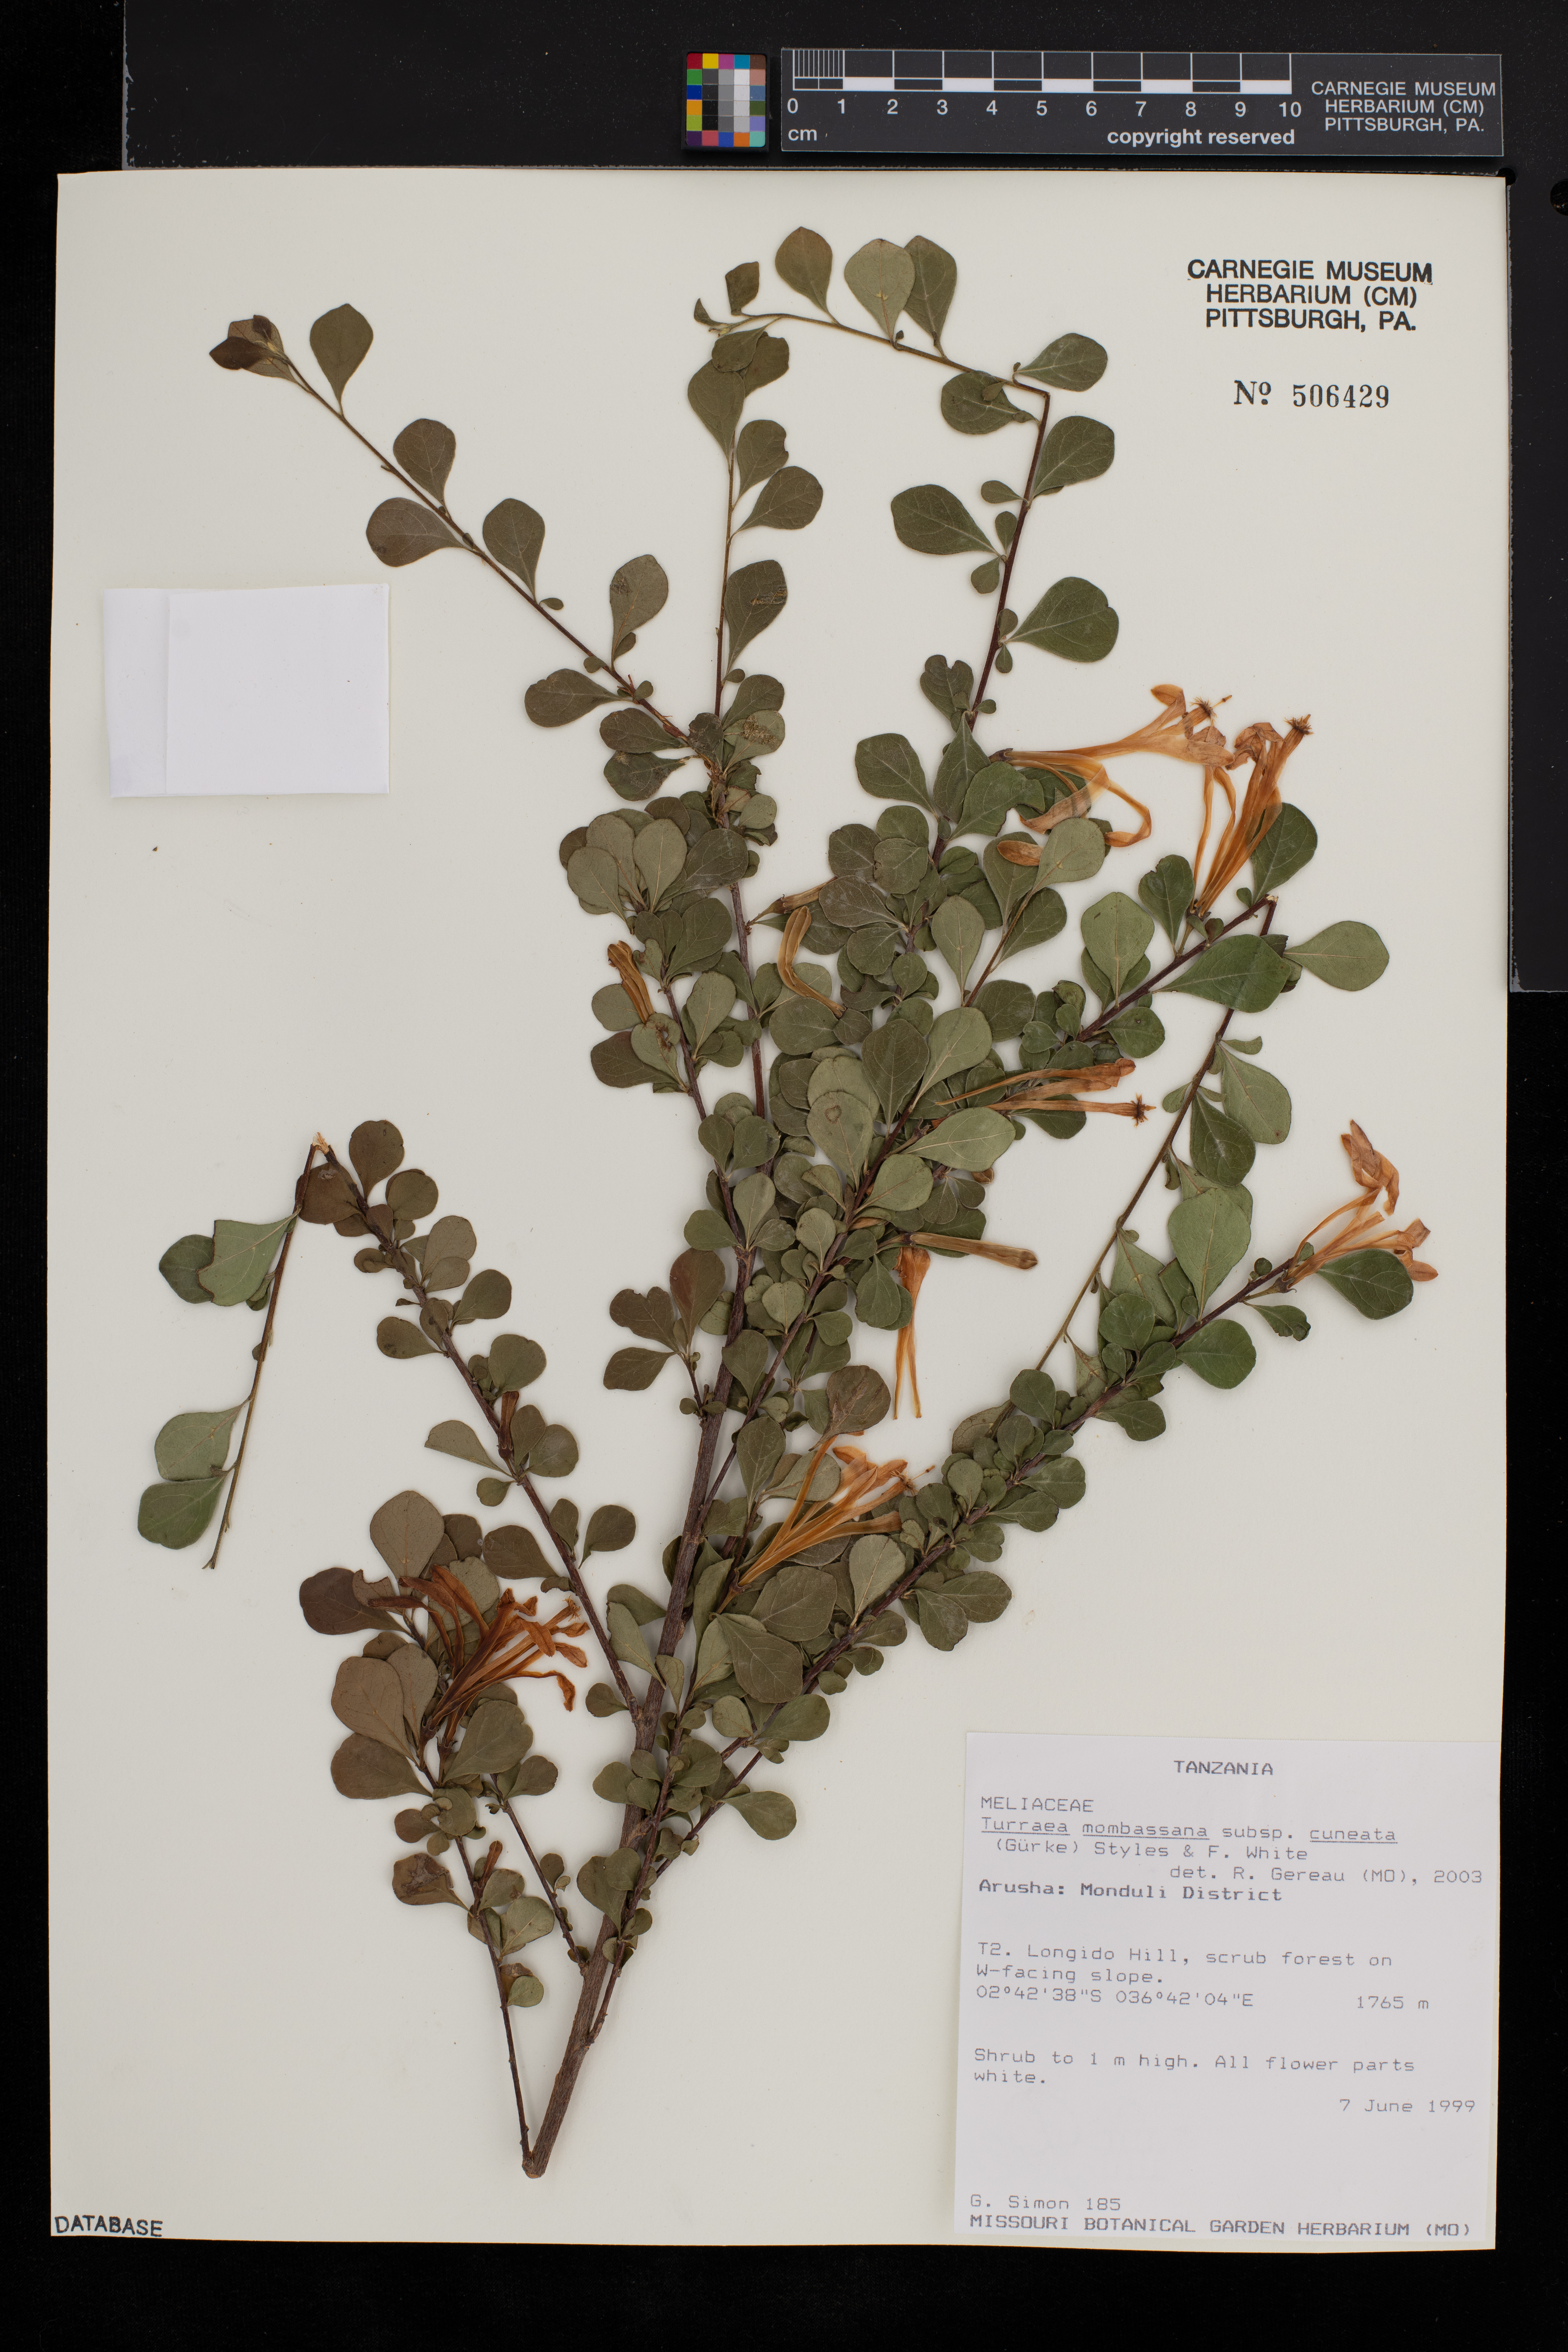 Turraea mombassana subsp. cuneata image